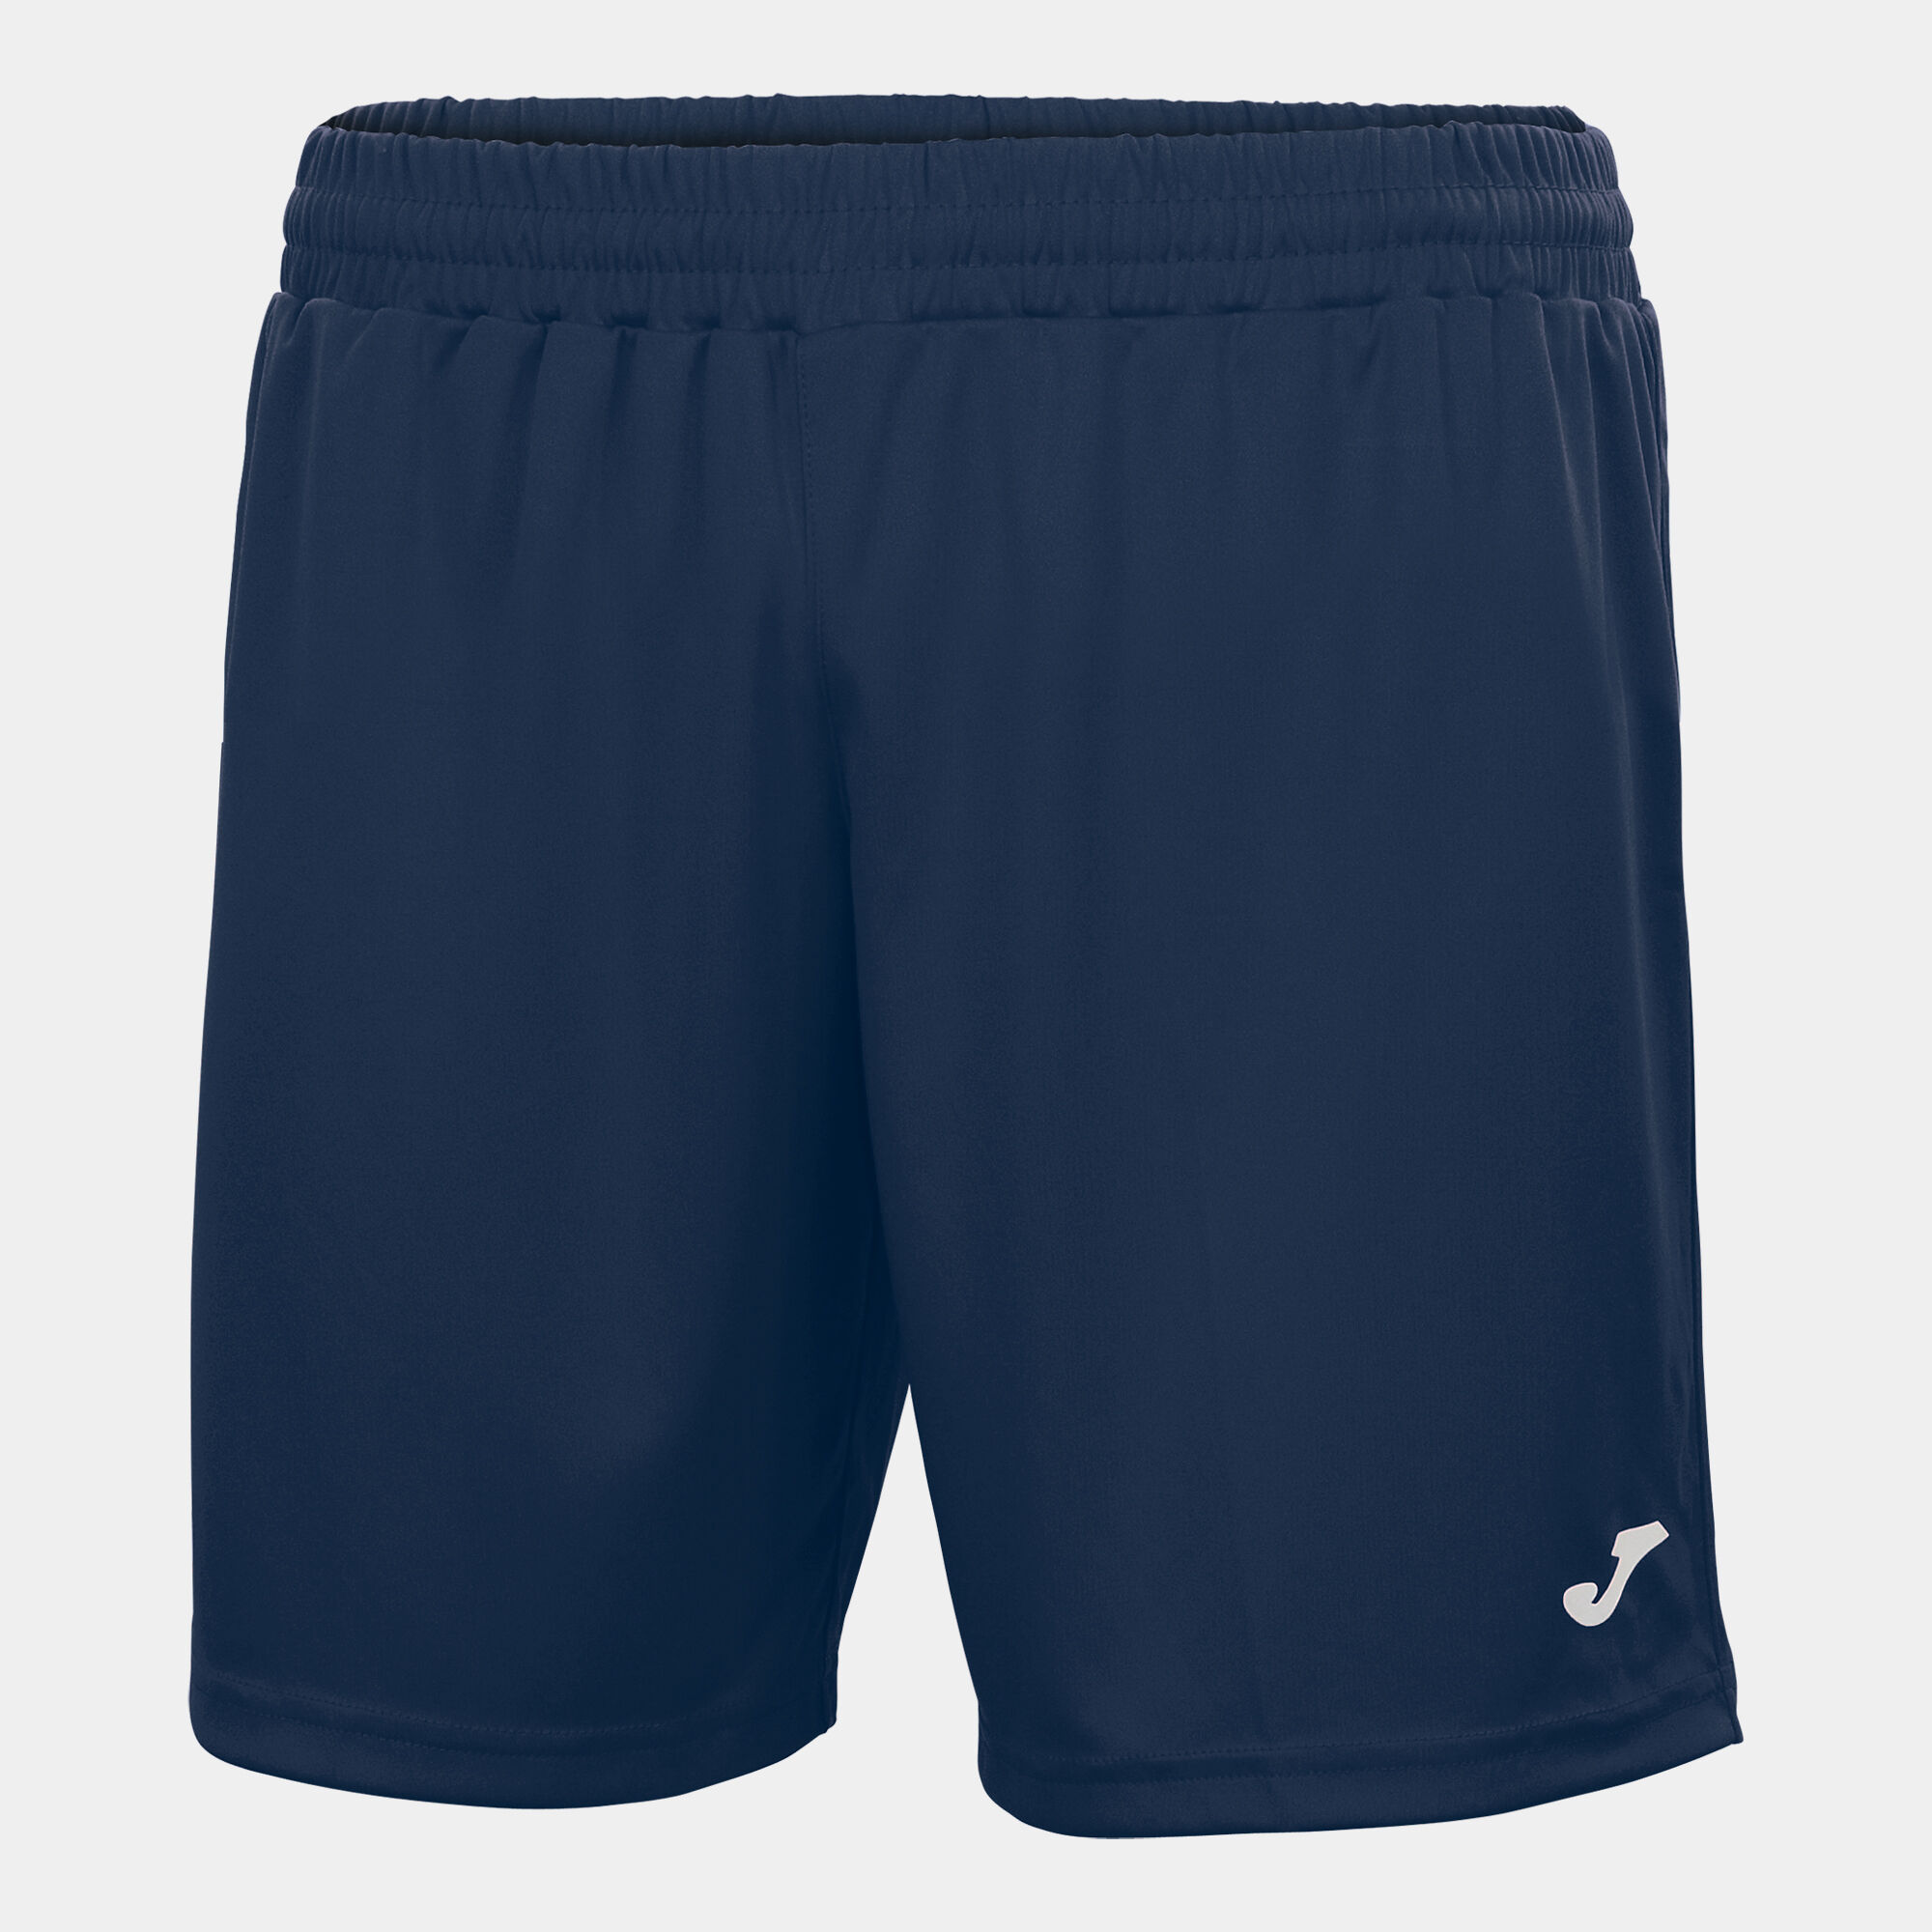 Shorts man Treviso navy blue